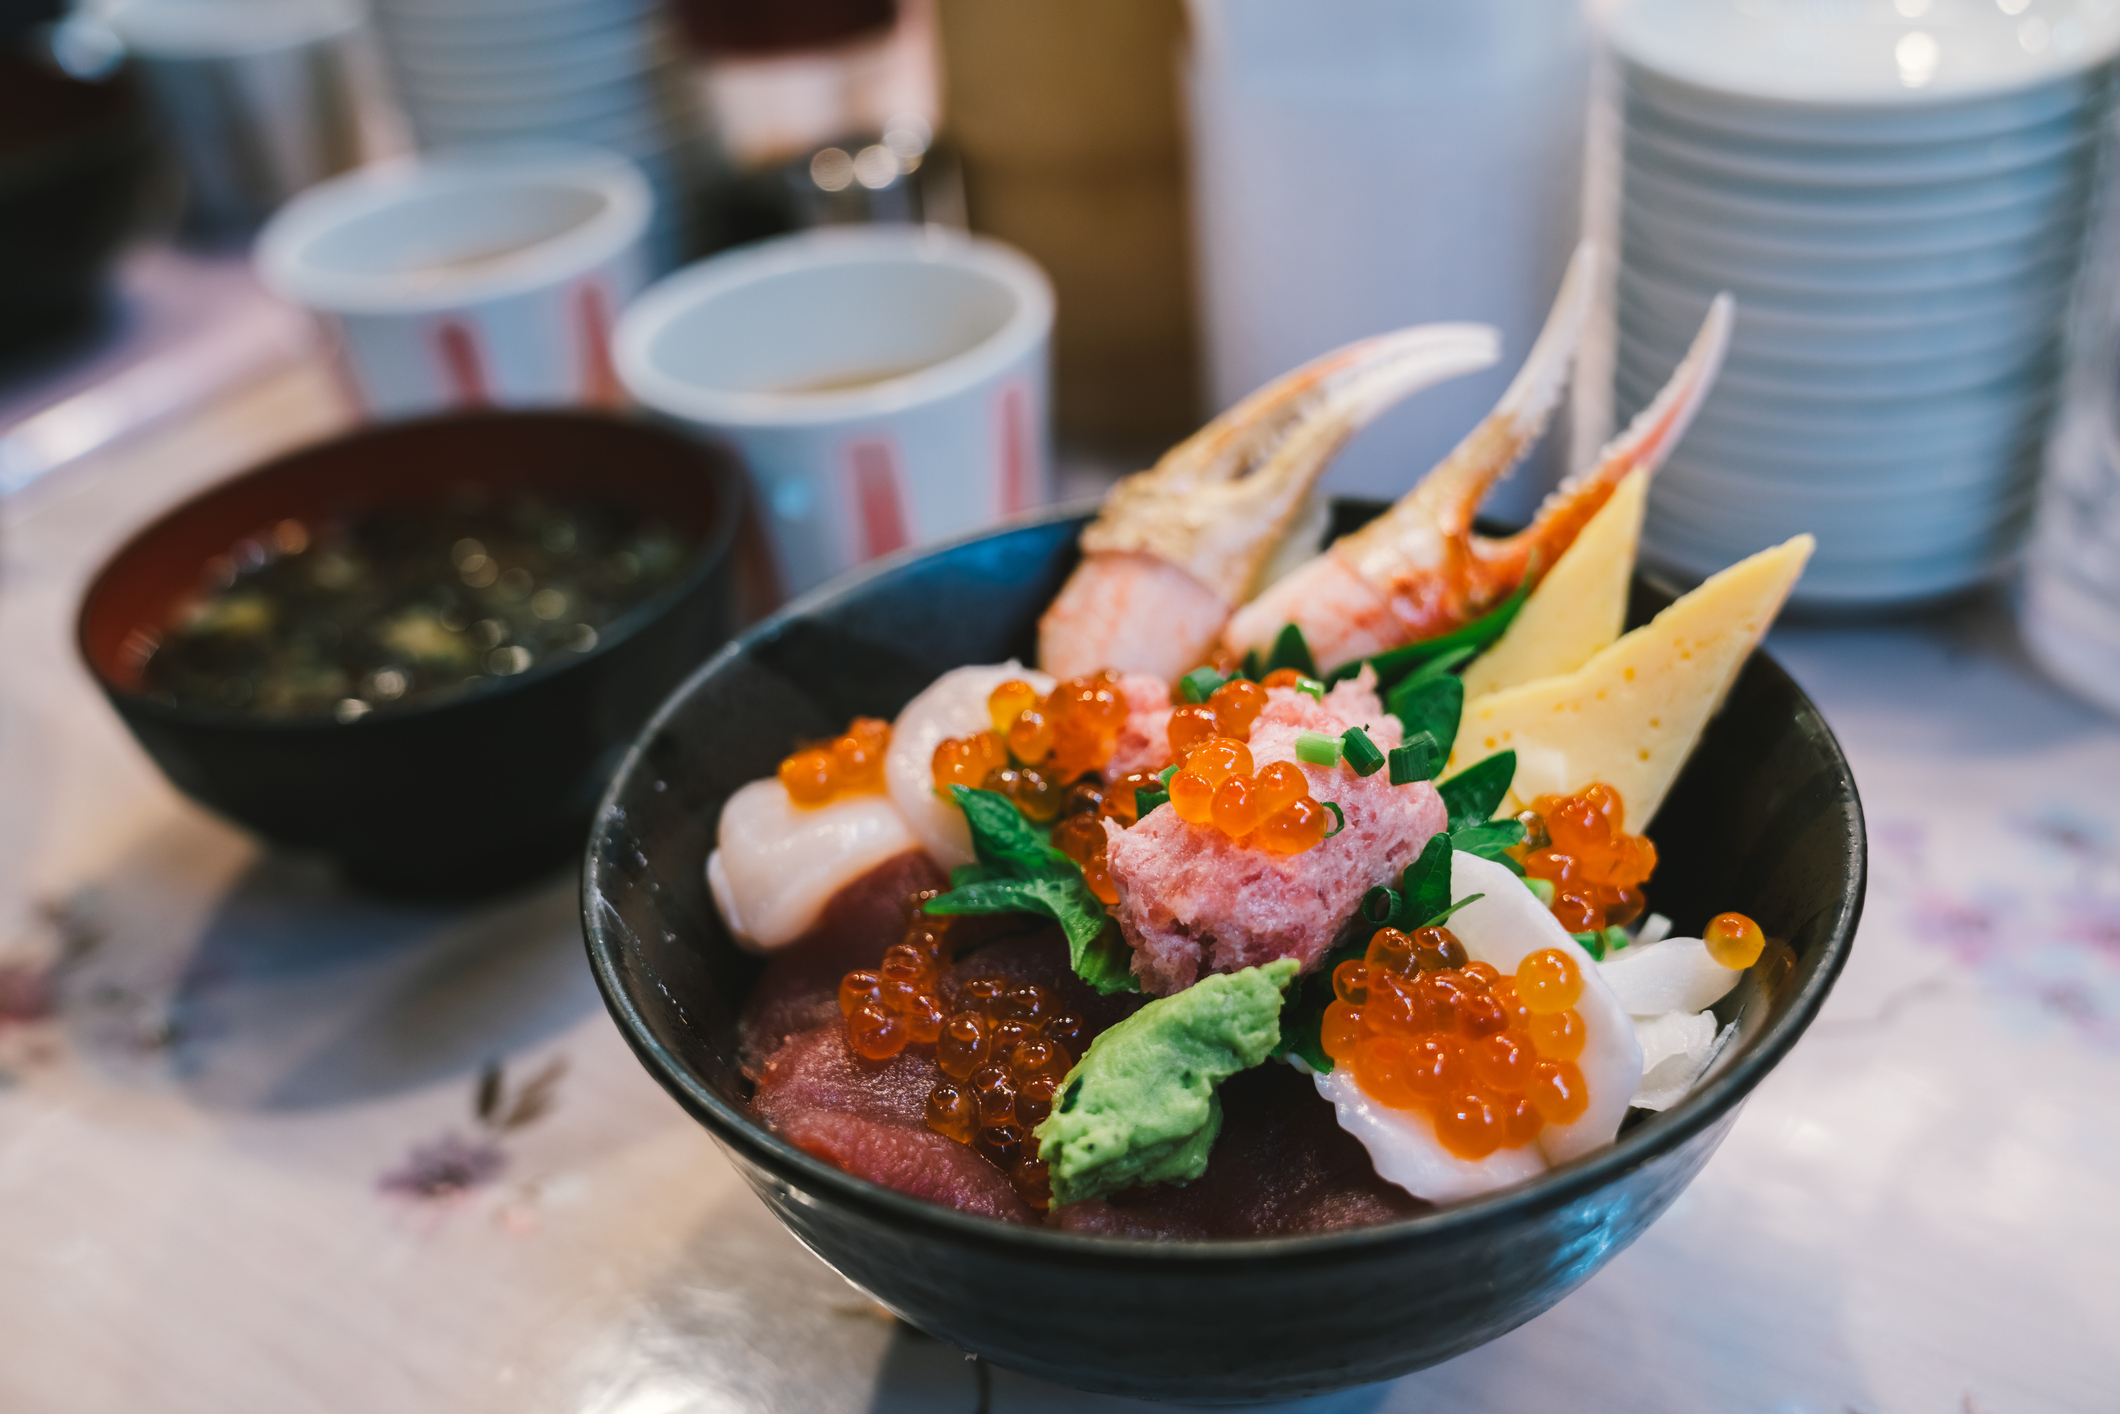 Chirashi Sushi Don or sashimi donburi, Japanese seafood rice bowl topped with mixed raw tuna fish, salmon roe, hotate scallop, engawa, crab claw meat, and wasabi. Japan famous traditional food concept